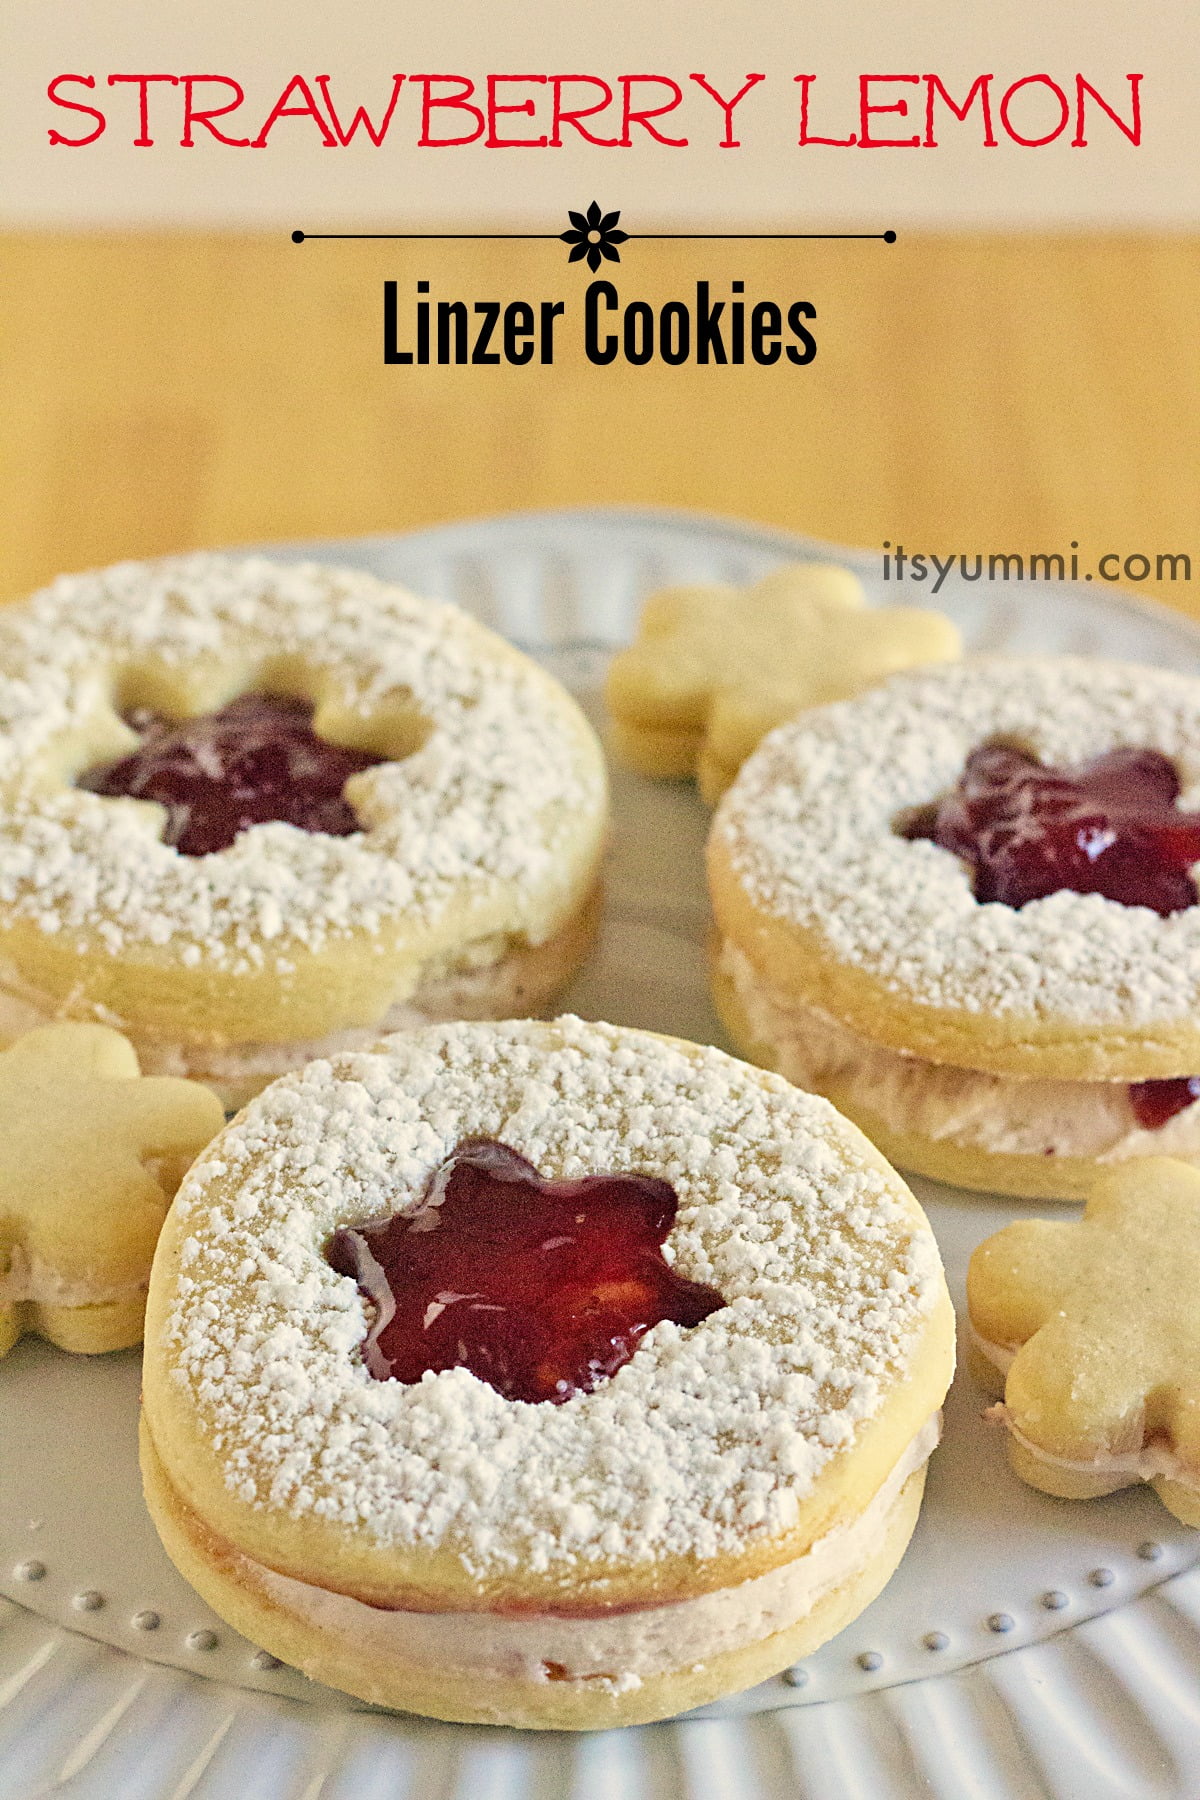 Strawberry Lemon Linzer Cookies from ItsYummi.com